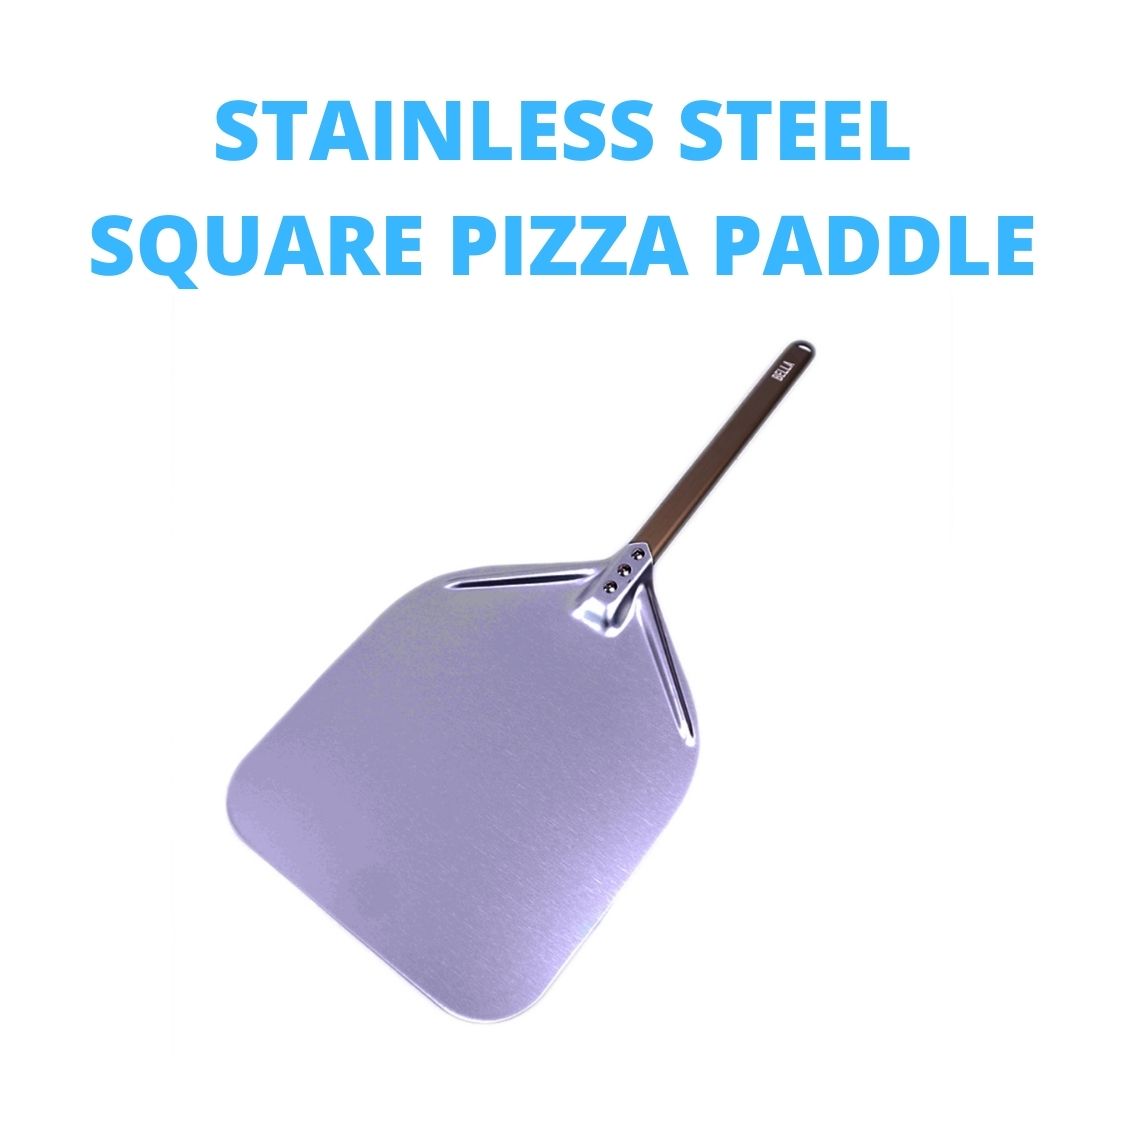 square pizza paddle